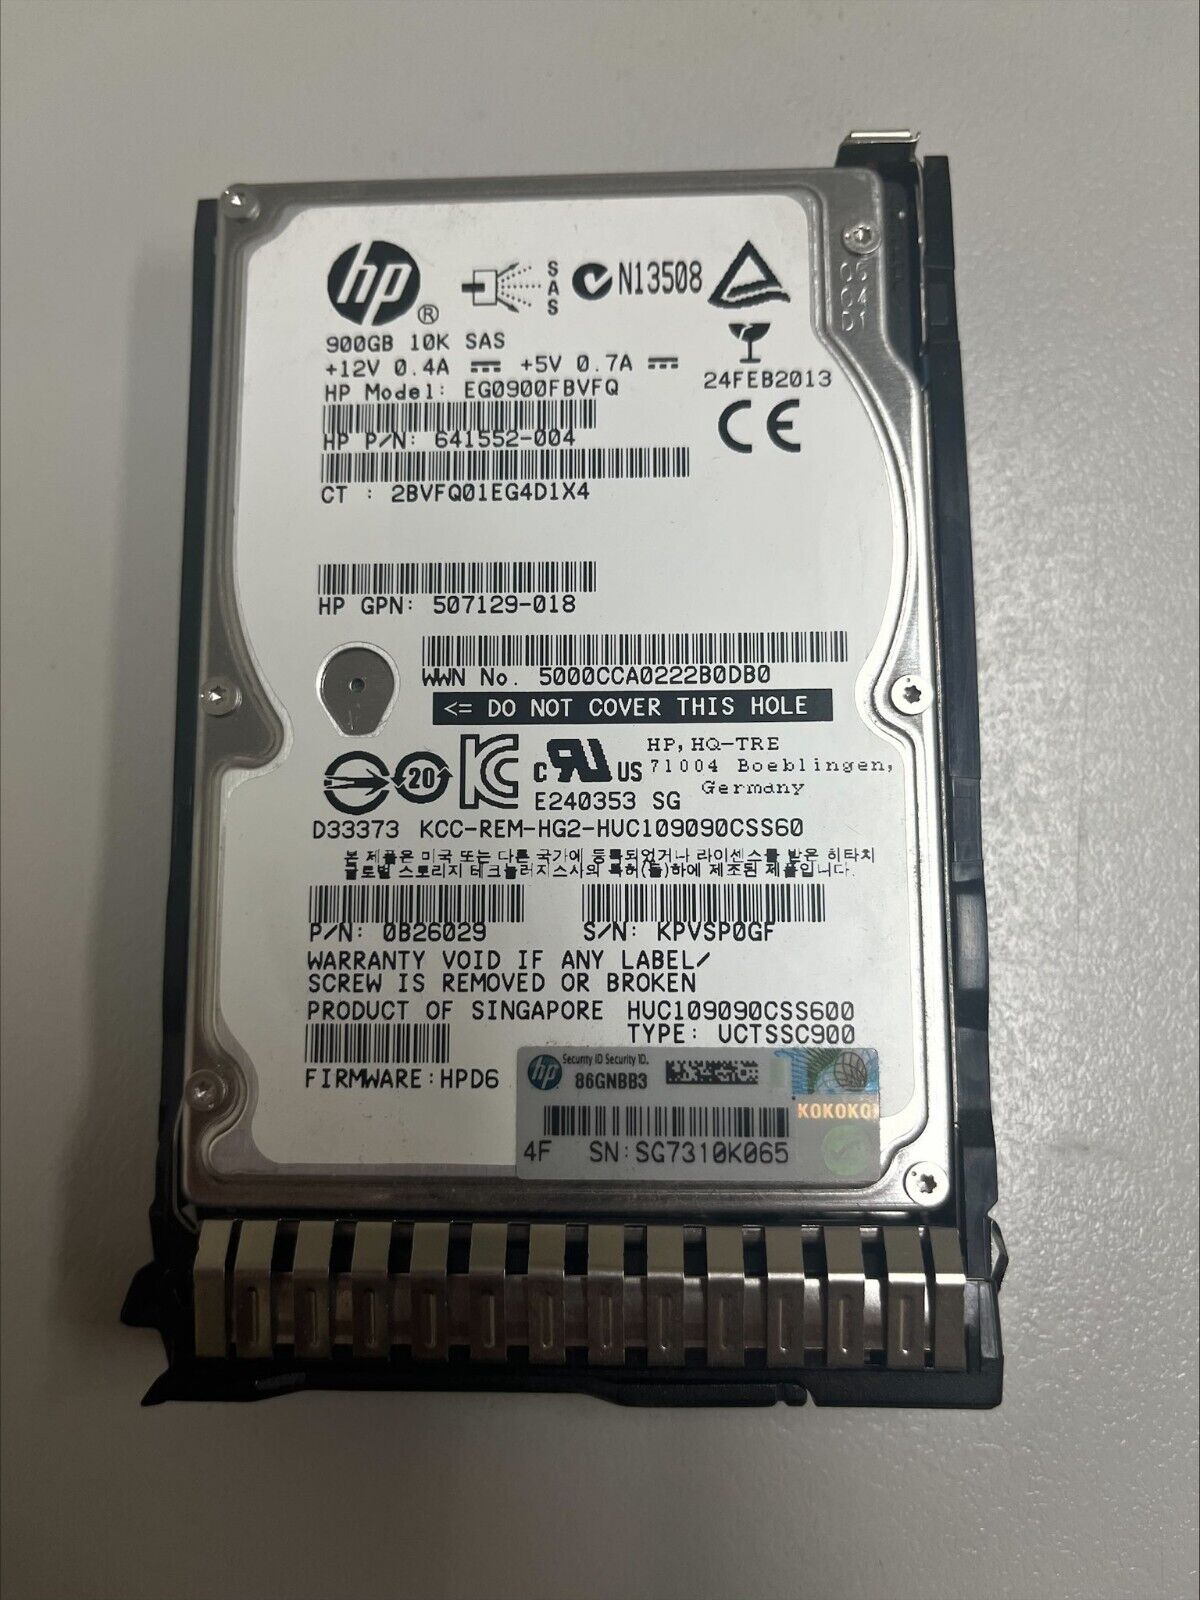 HP EG0900FBVFQ 900GB 6G 10K 2.5" SAS 641552-004 Hard Drive For HP G8 G9